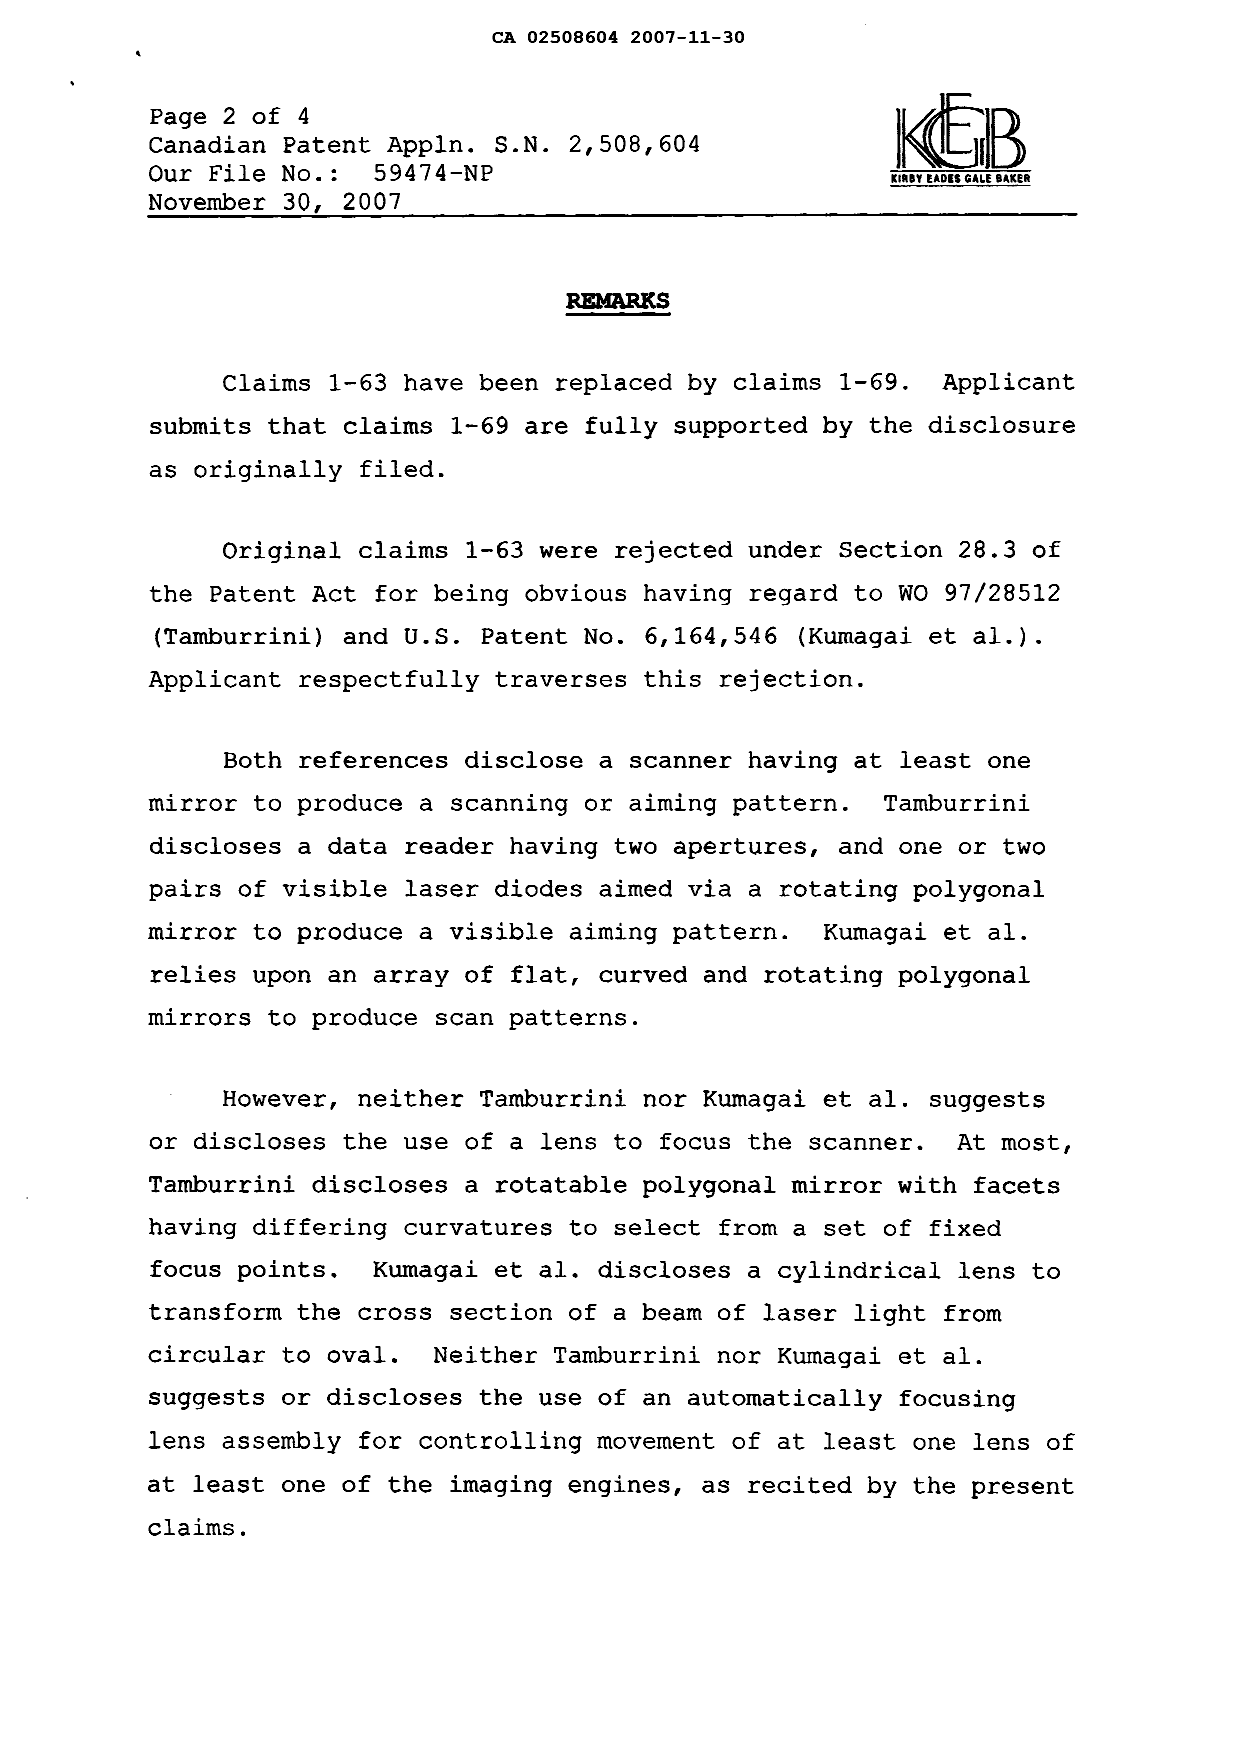 Canadian Patent Document 2508604. Prosecution-Amendment 20071130. Image 2 of 19